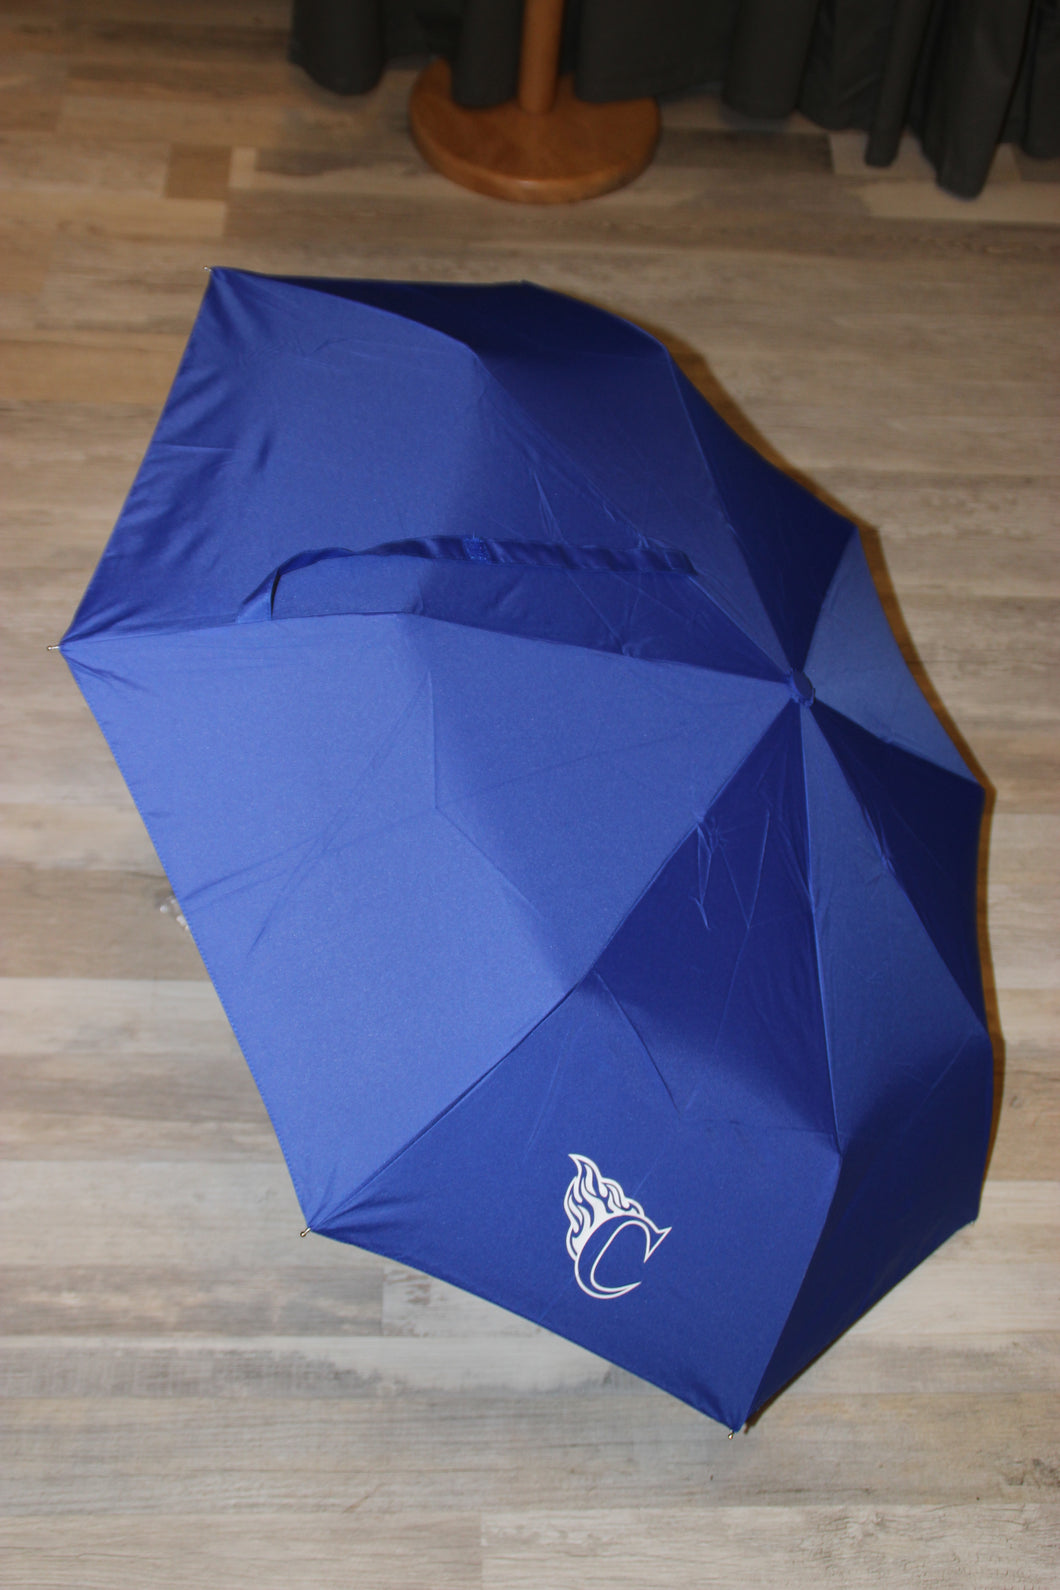 Regenschirm kompakt